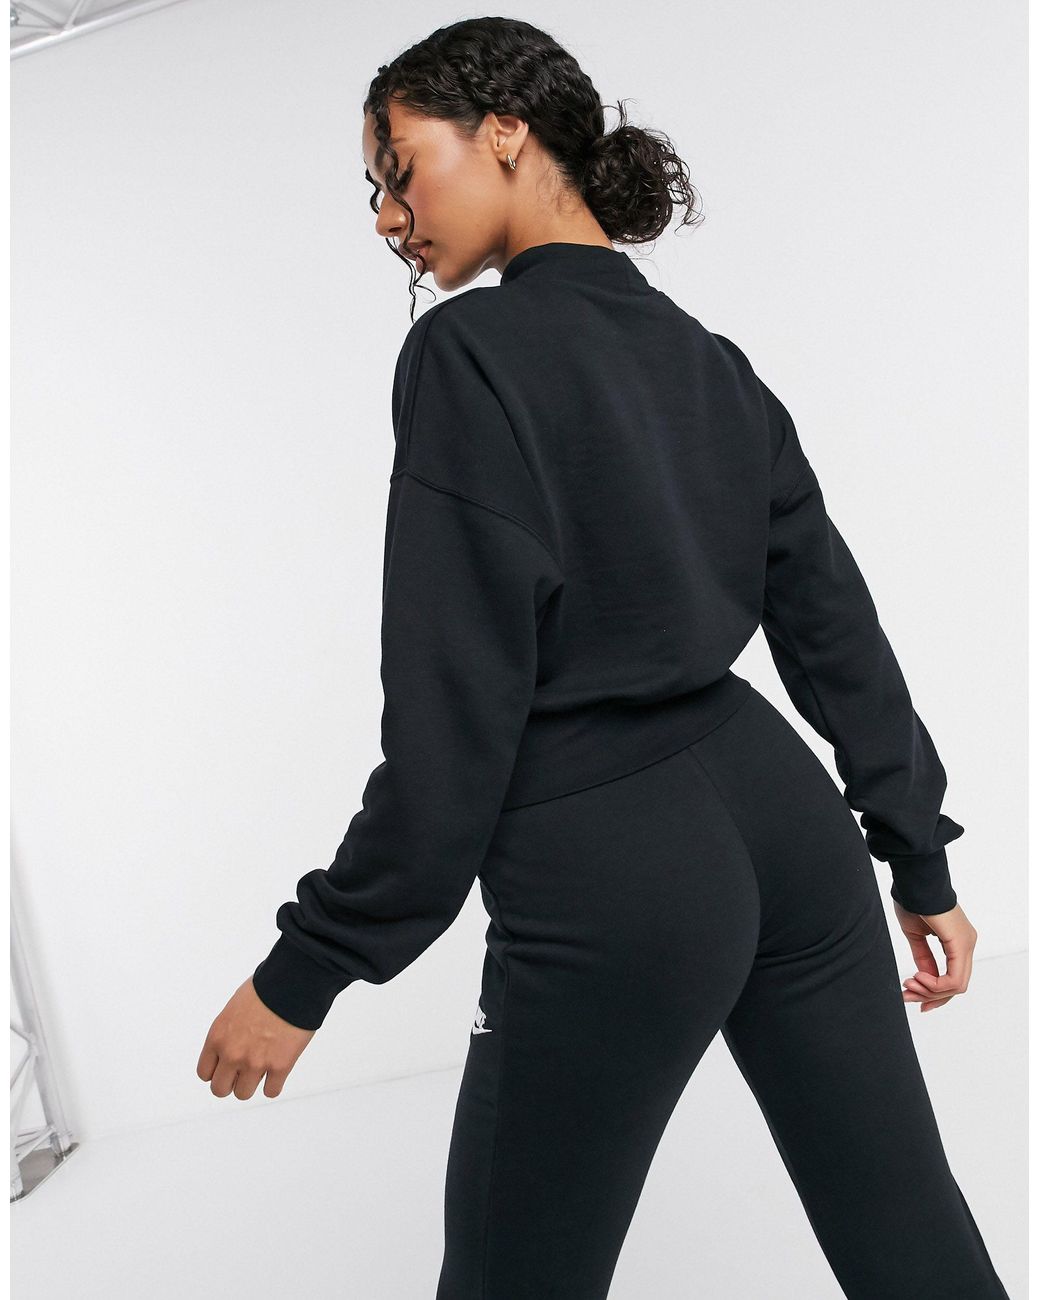 Nike Essentials Cropped Mock Neck Sweatshirt in Black | Lyst